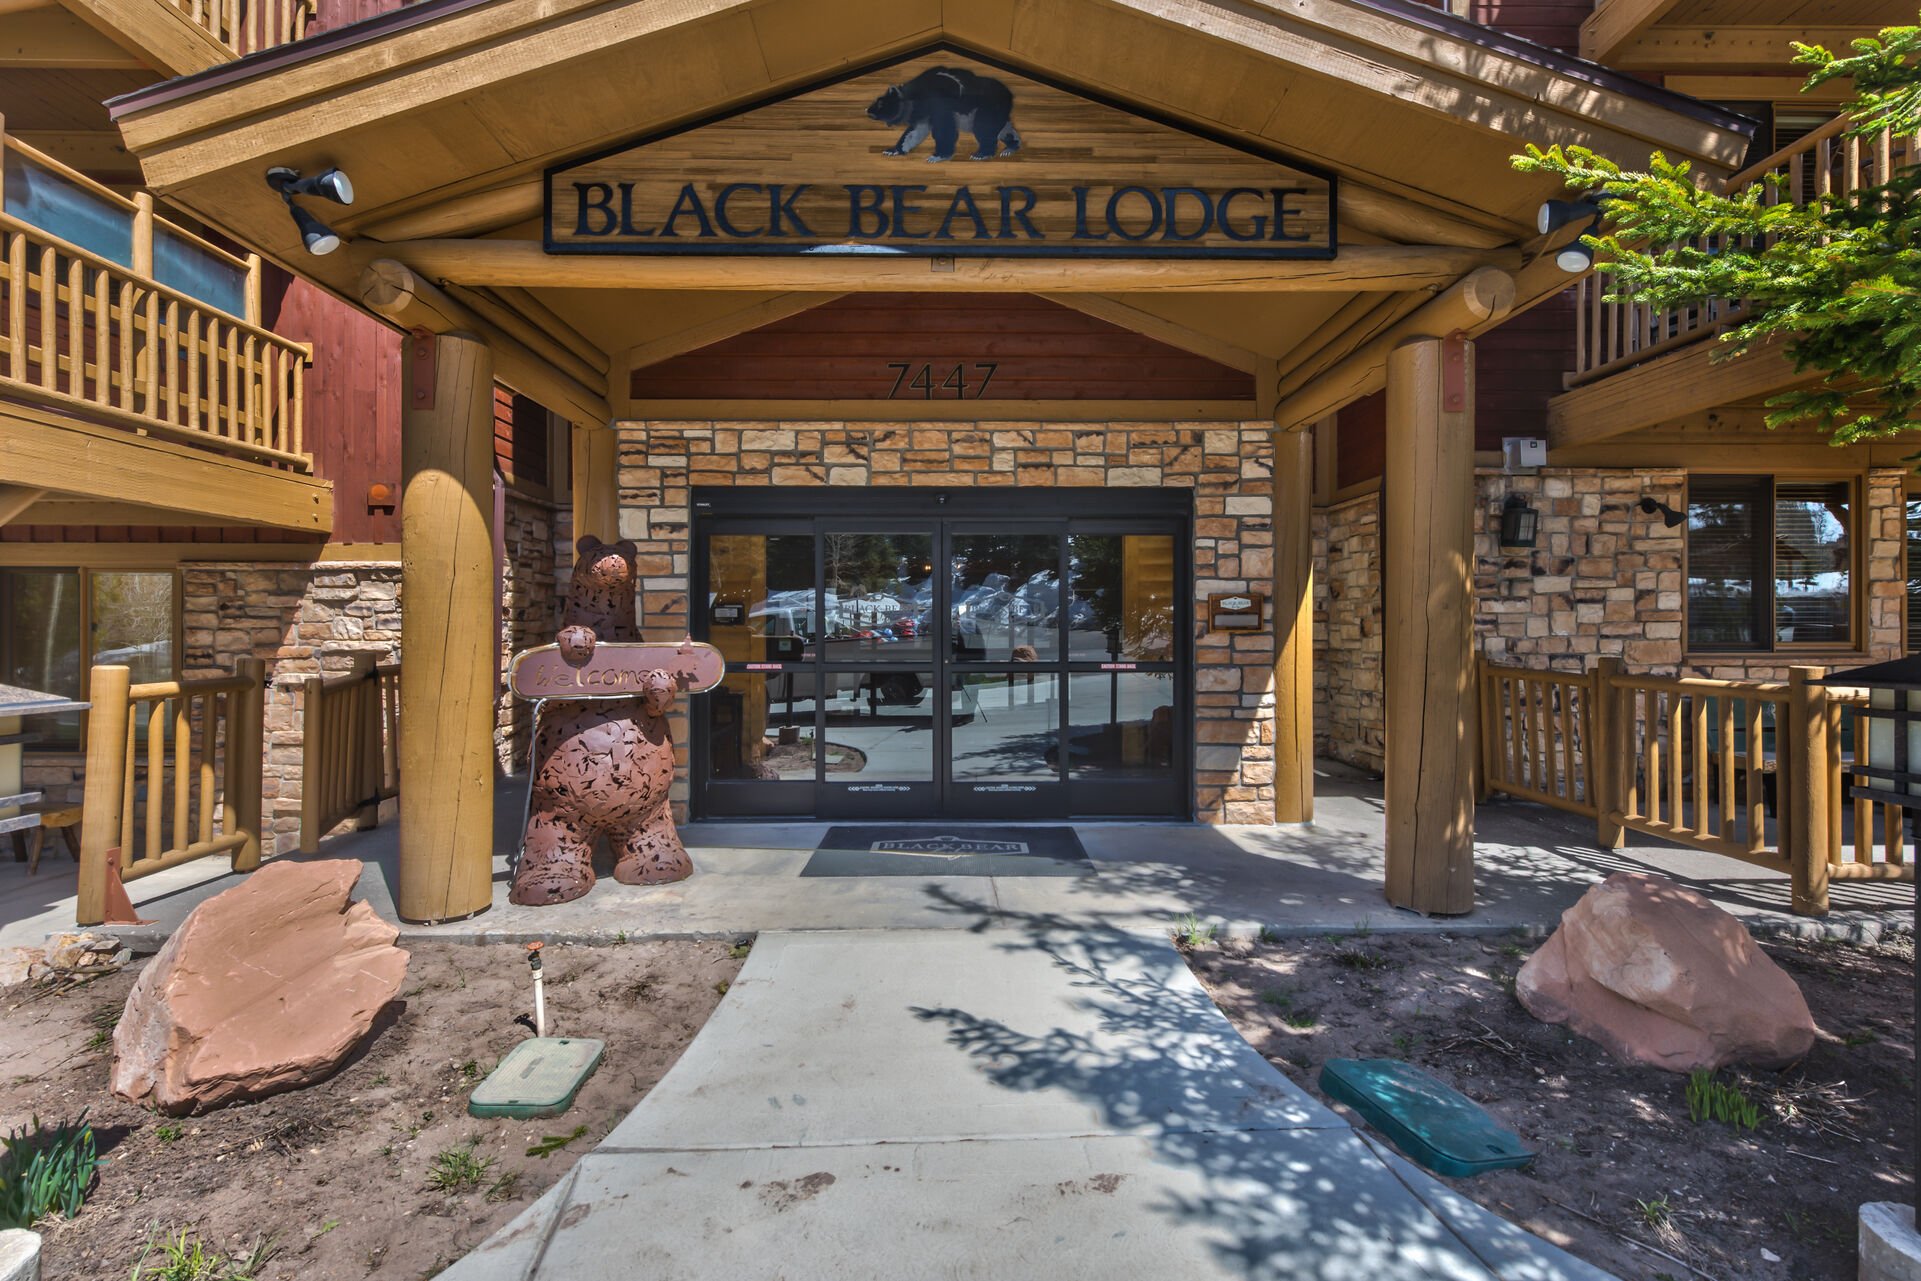 Entrance to Black Bear Lodge